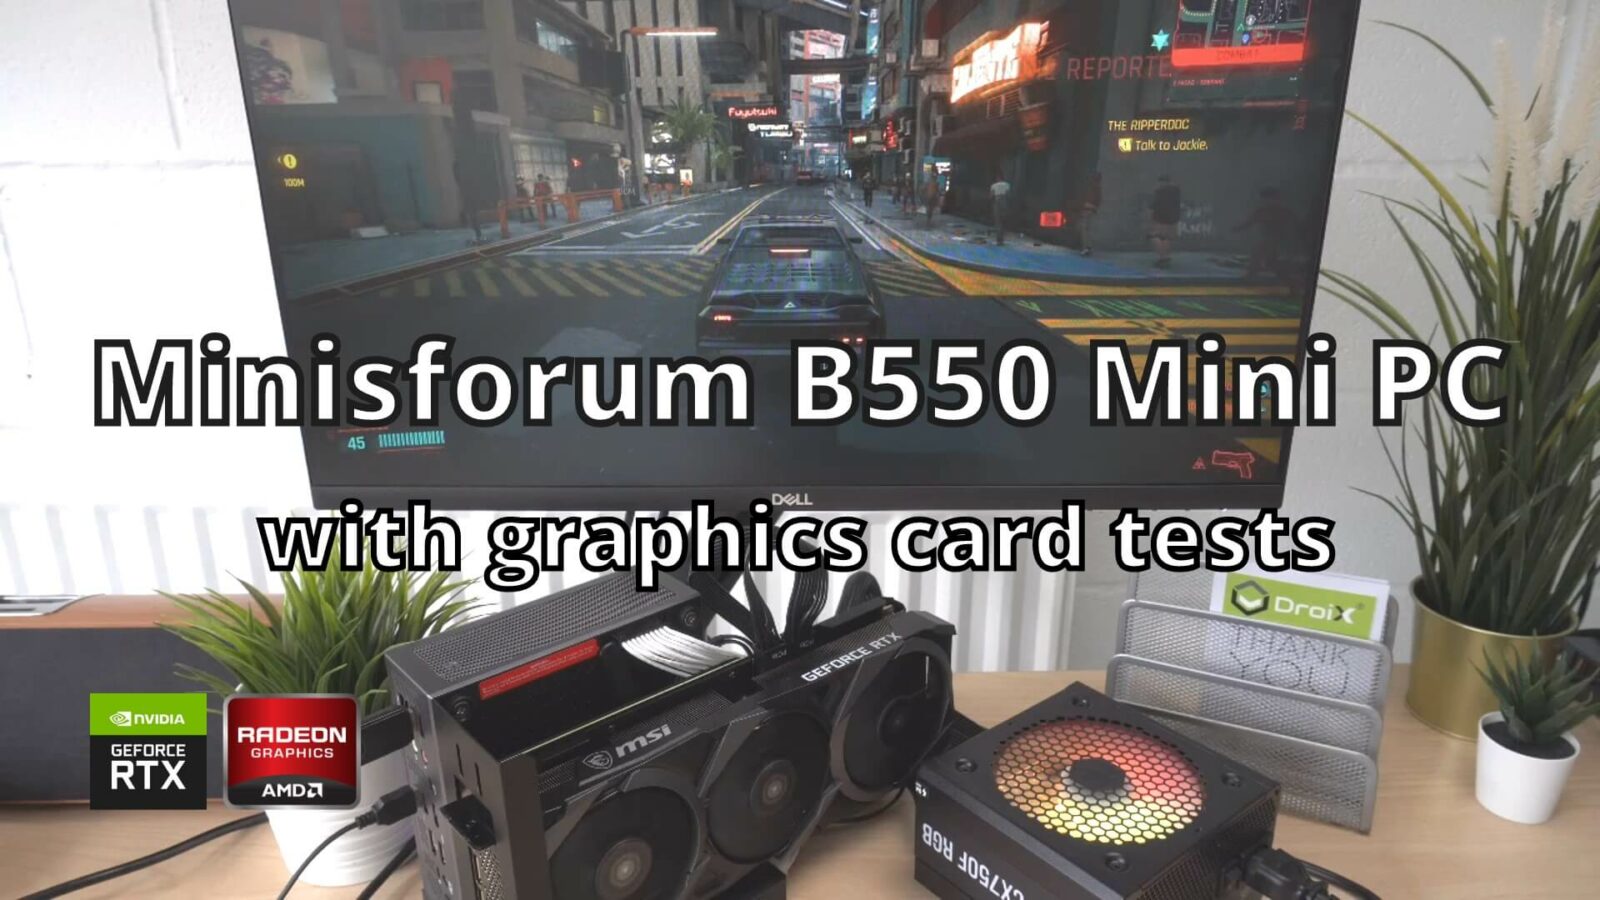 MINISFORUM EliteMini B550 is mini PC with AMD Ryzen and external graphics  dock - Liliputing